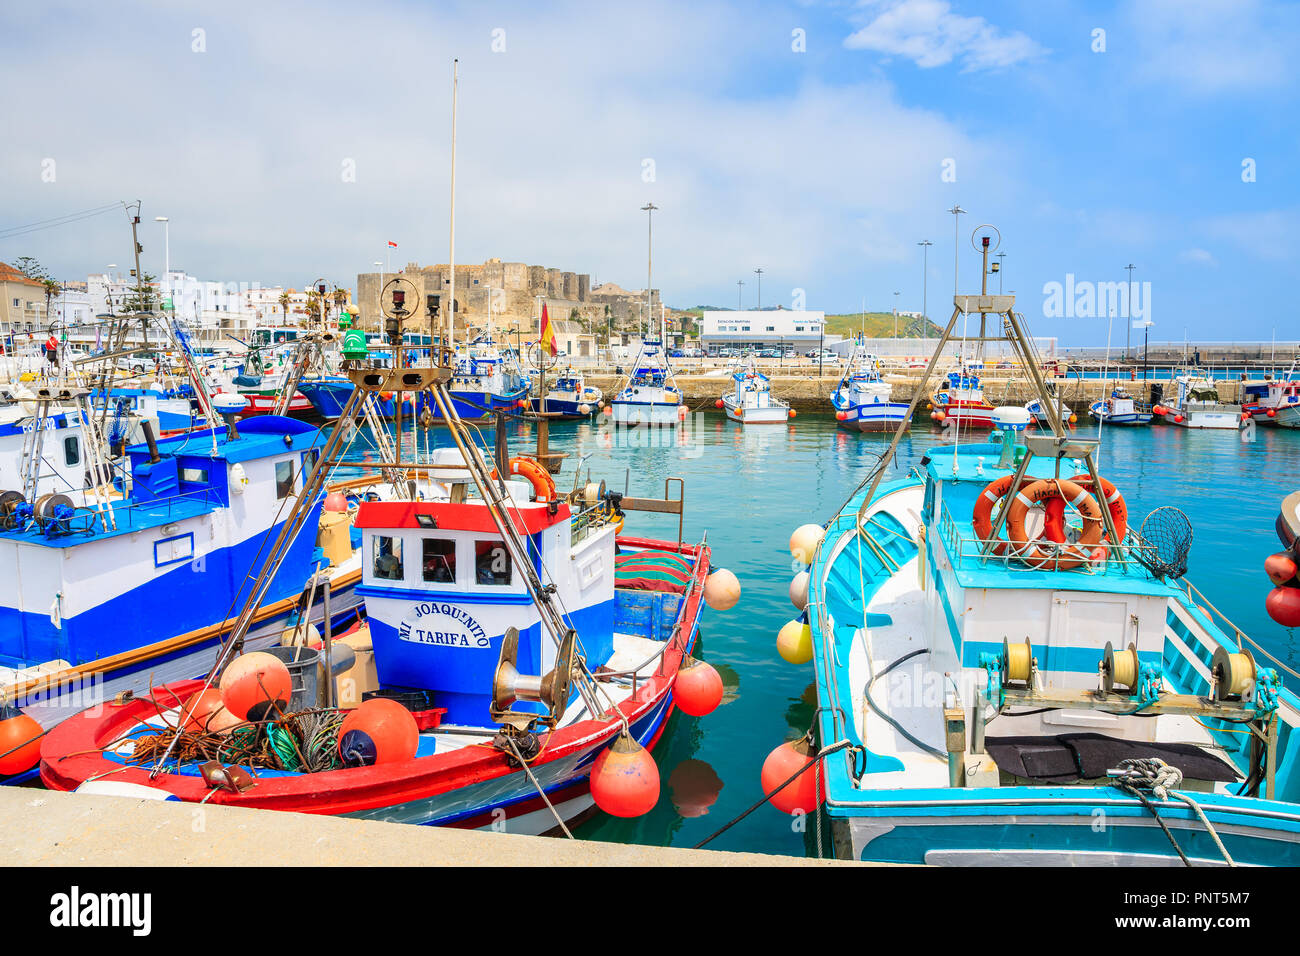 Puerto pesquero tarifa fotografías e imágenes de alta resolución - Alamy